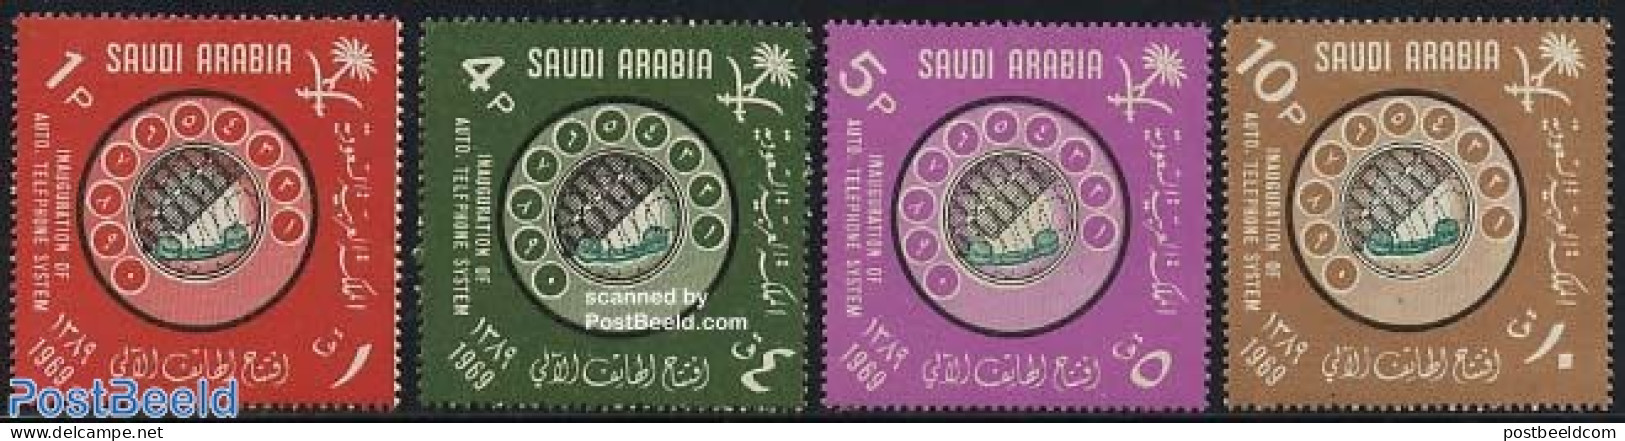 Saudi Arabia 1972 Automatic Telephone System 4v, Mint NH, Science - Telecommunication - Telephones - Telecom